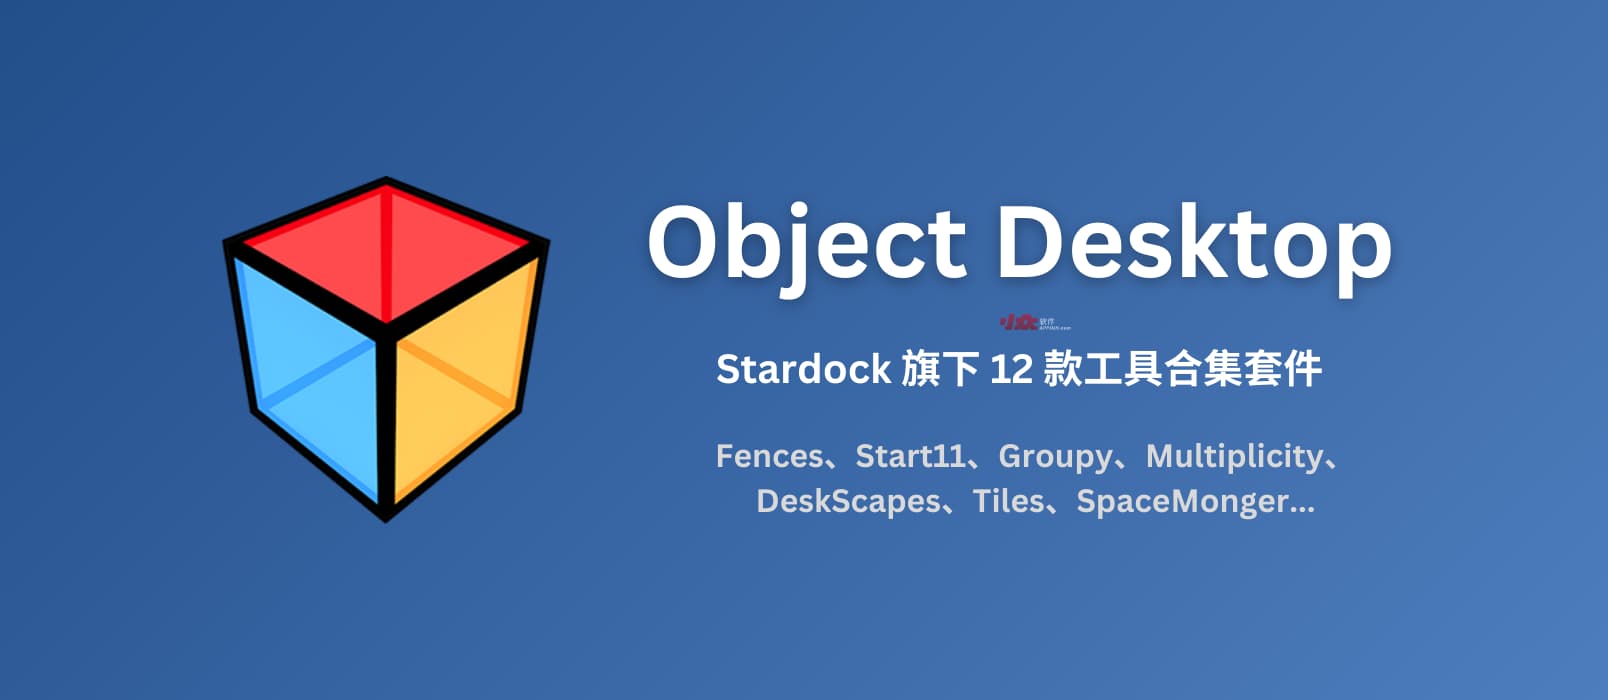 Object Desktop - Windows 生产力和个性化套件：包括 Fences、Start11 等 Stardock 旗下 12 款工具 1